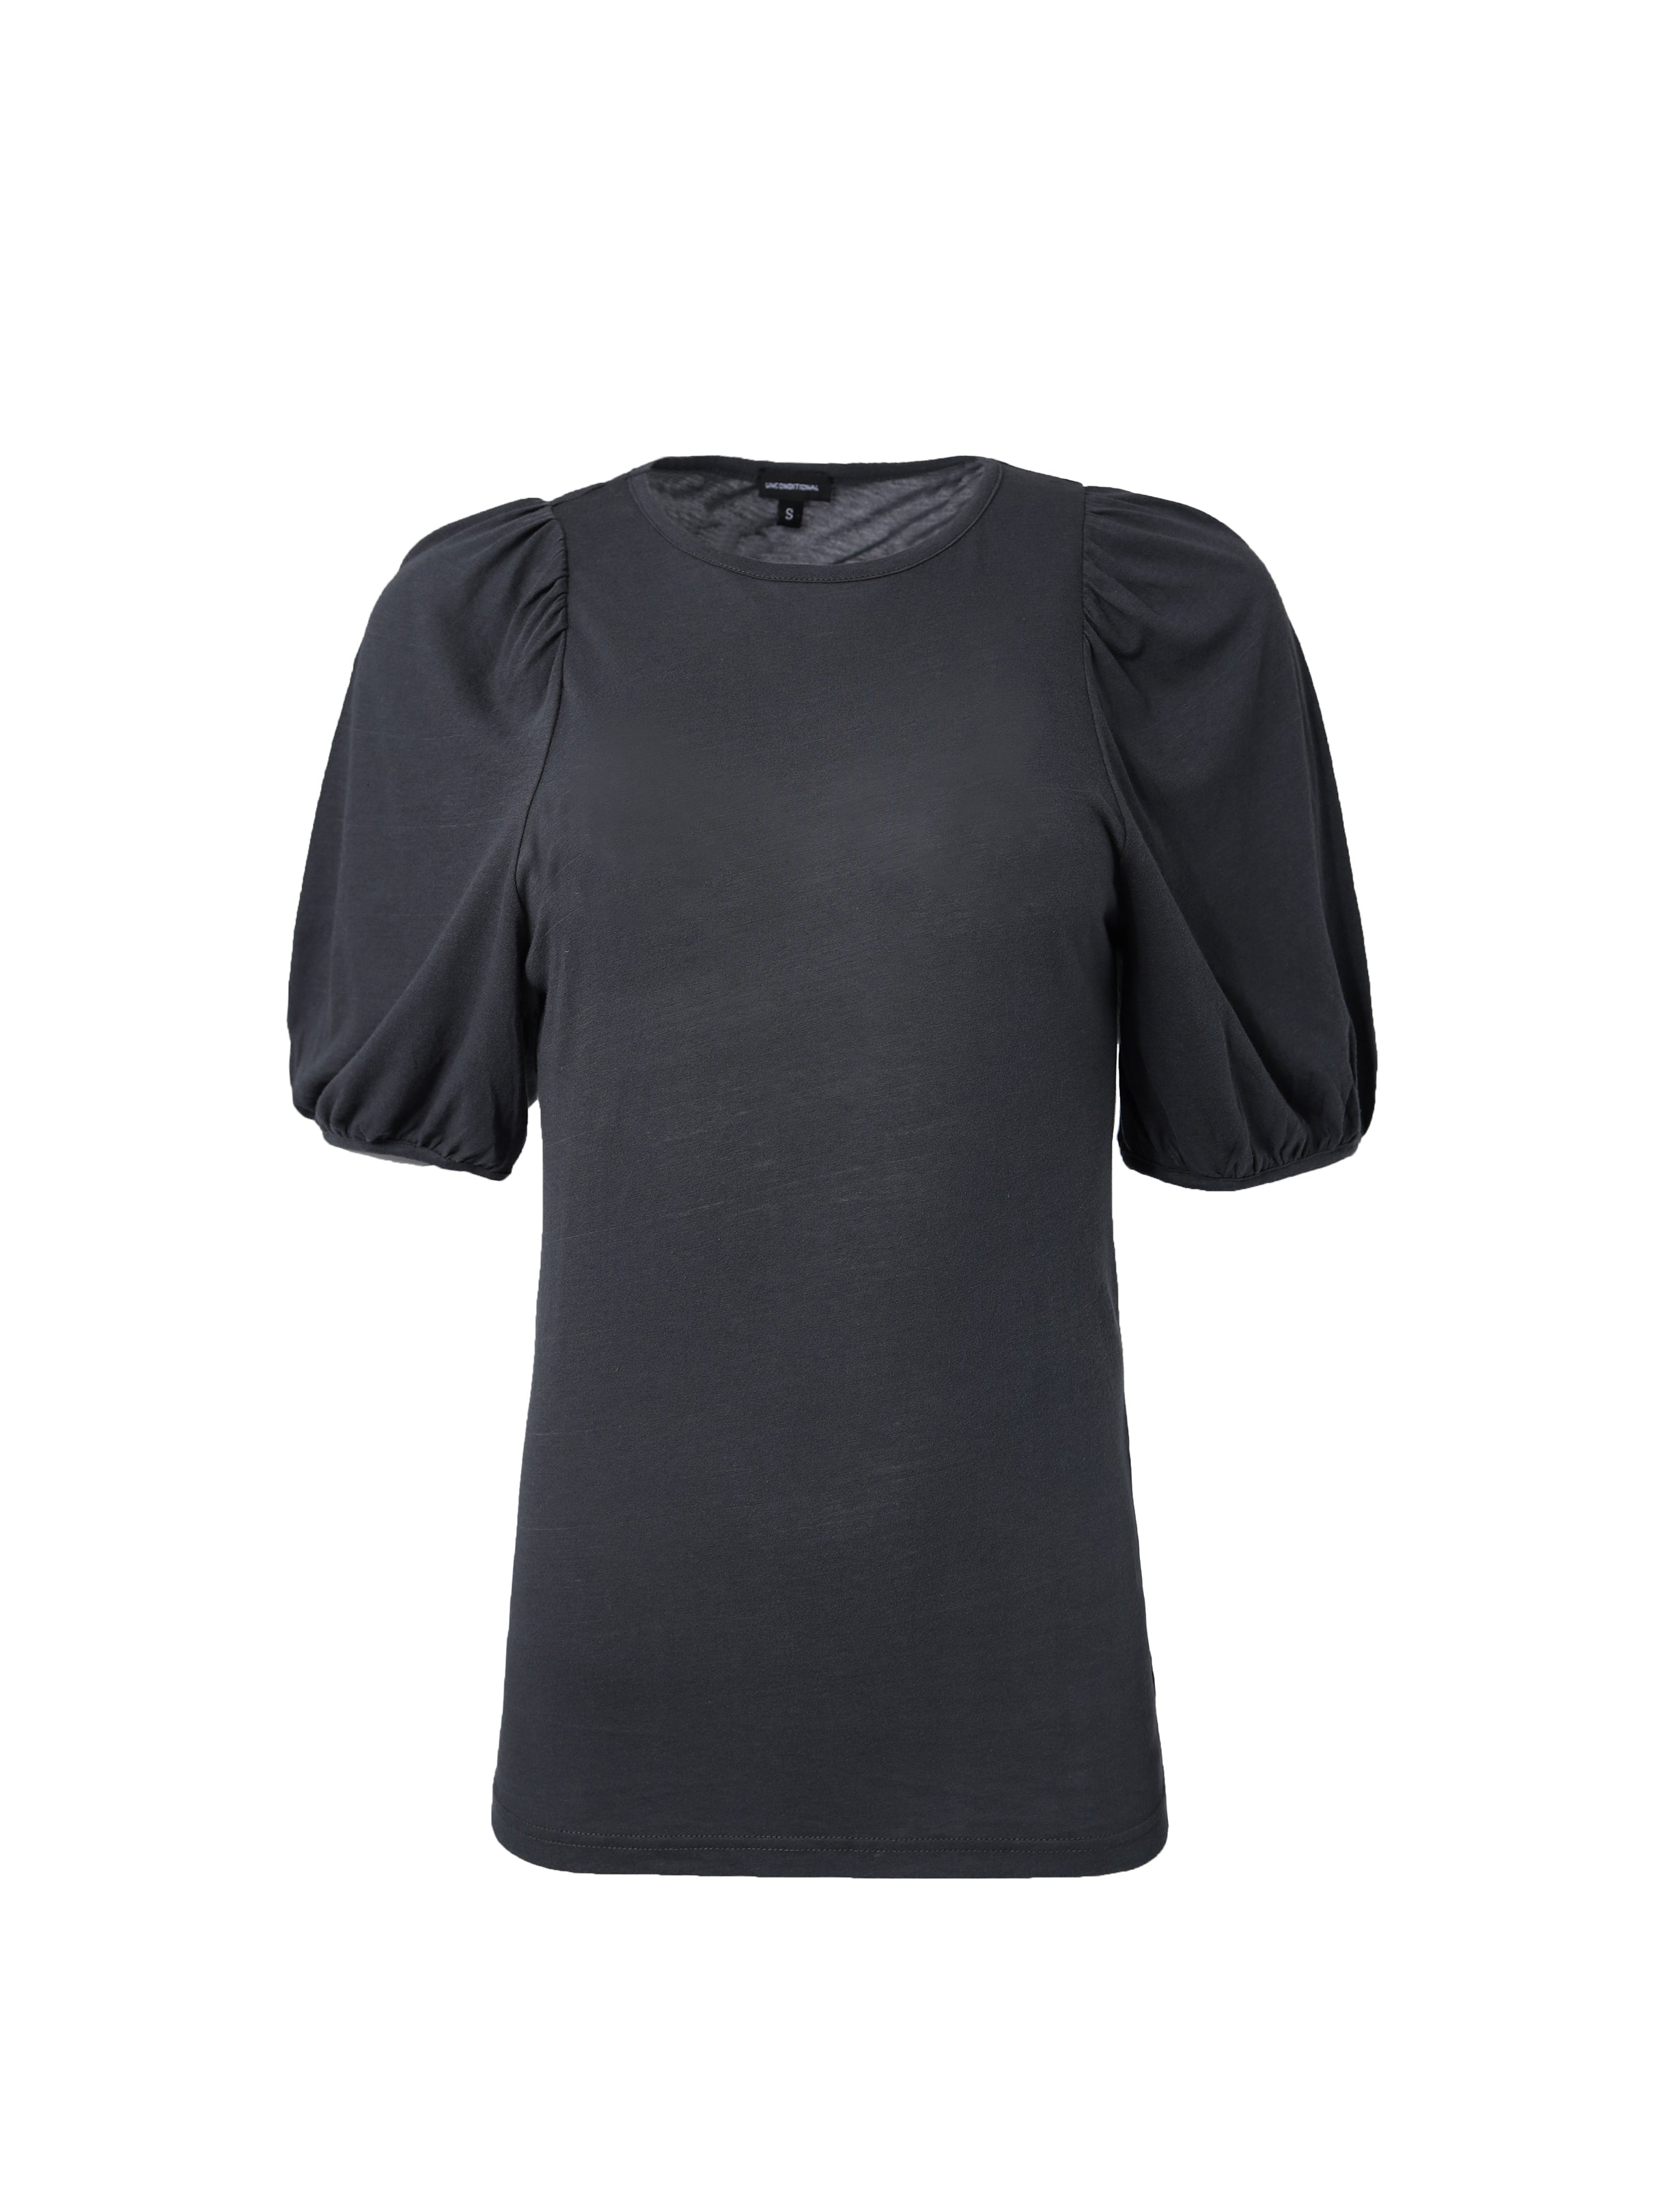 Charcoal Ruffle Sleeve T-Shirt